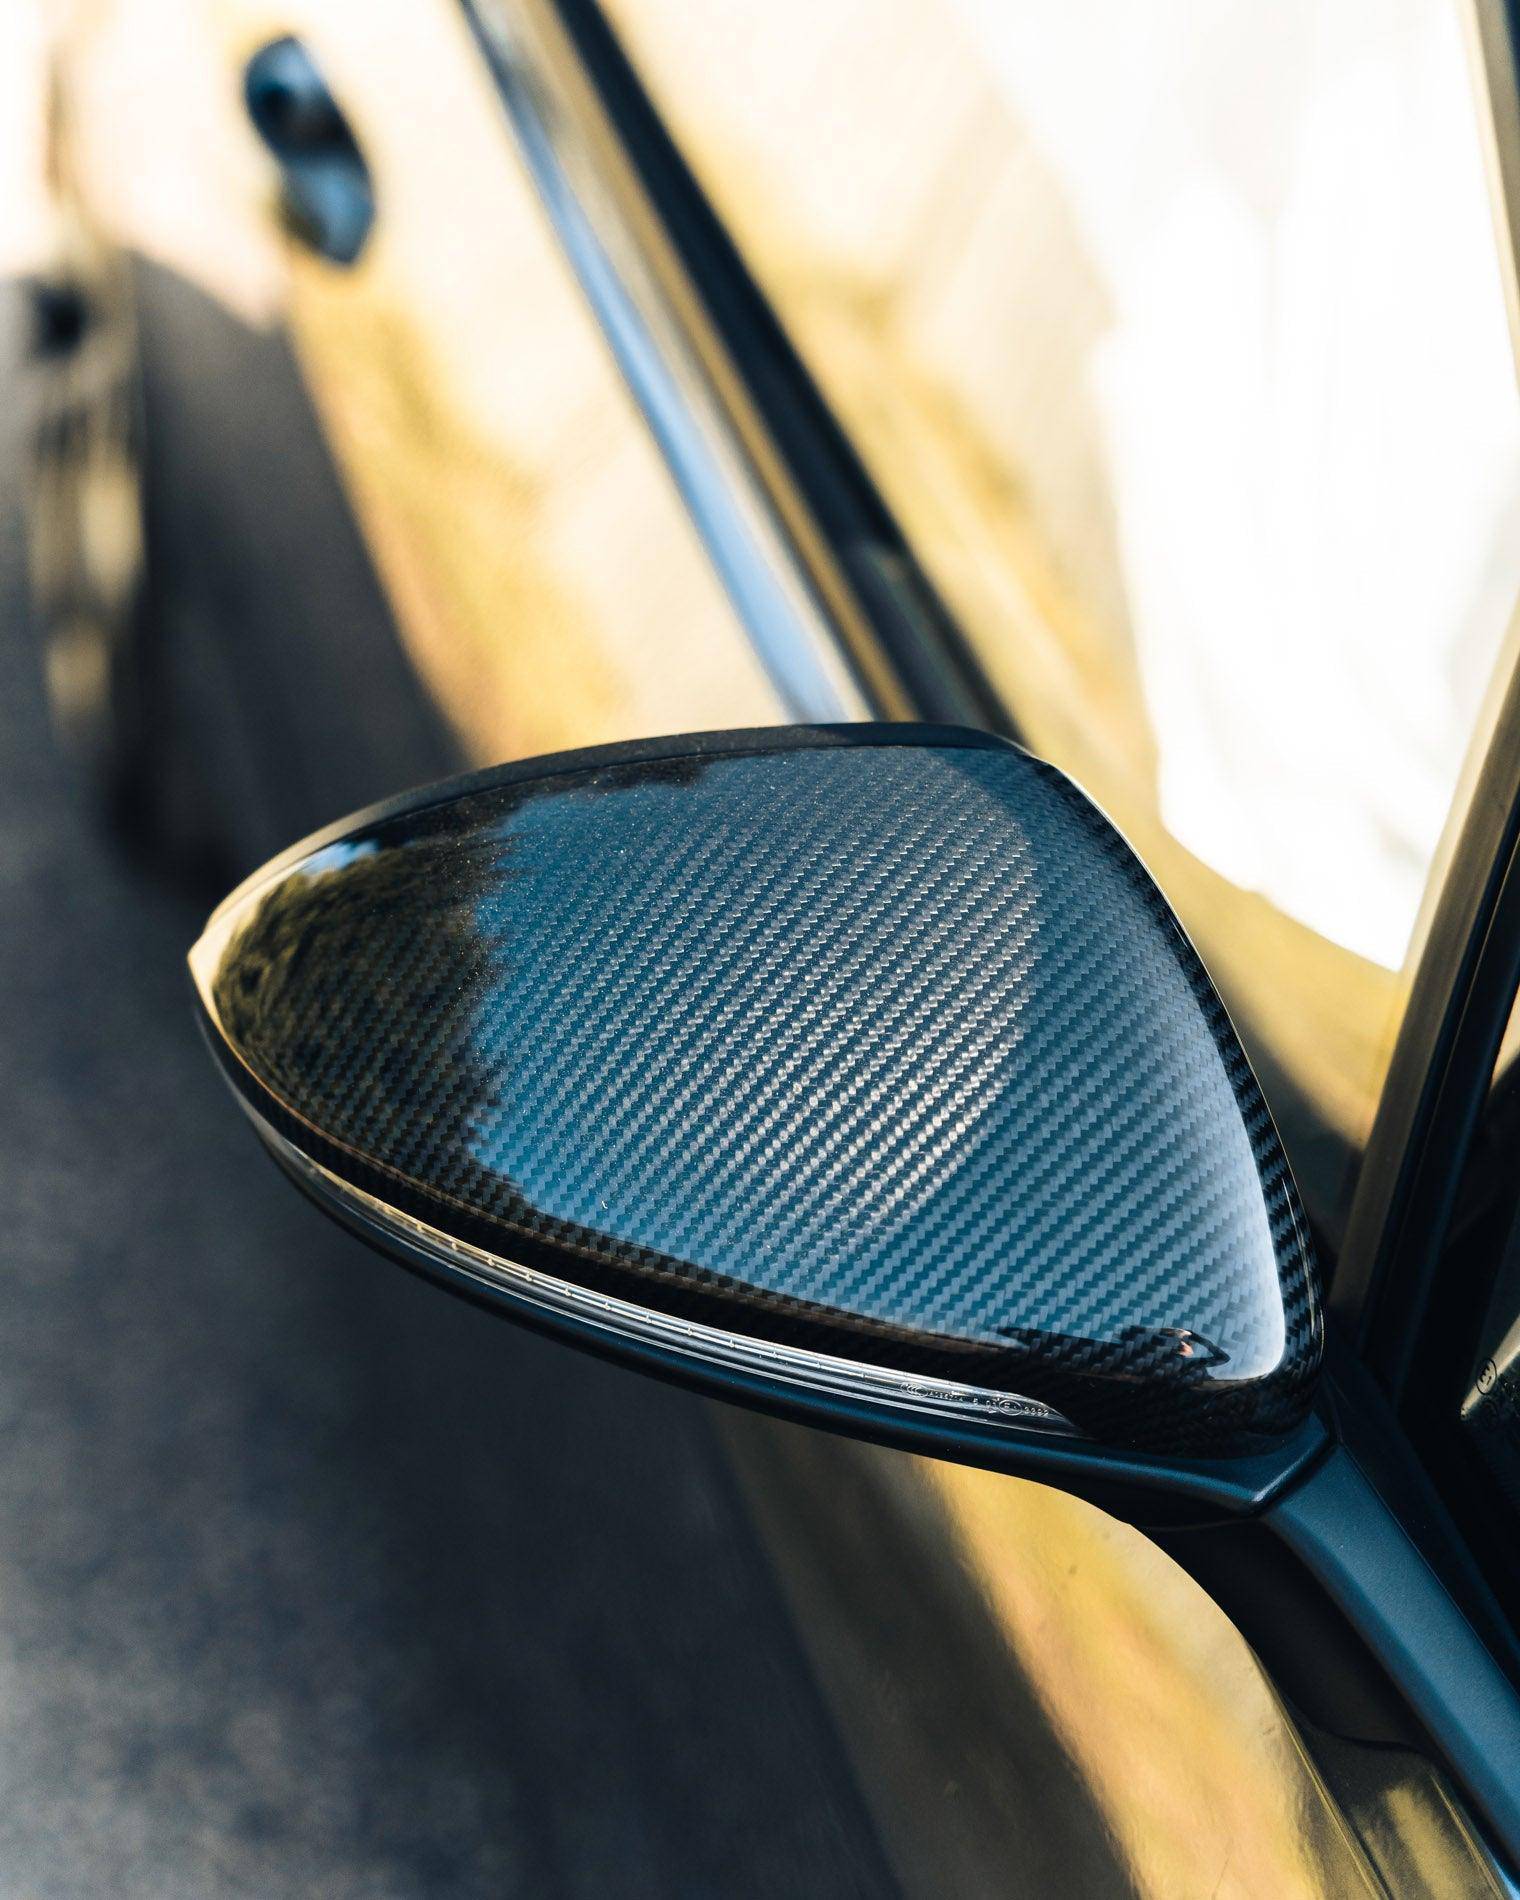 VW Golf, Golf GTI & Golf R Mk7 / Mk7.5 Pre-Preg Carbon Fibre Wing Mirror Covers by TRE (2013-2020)